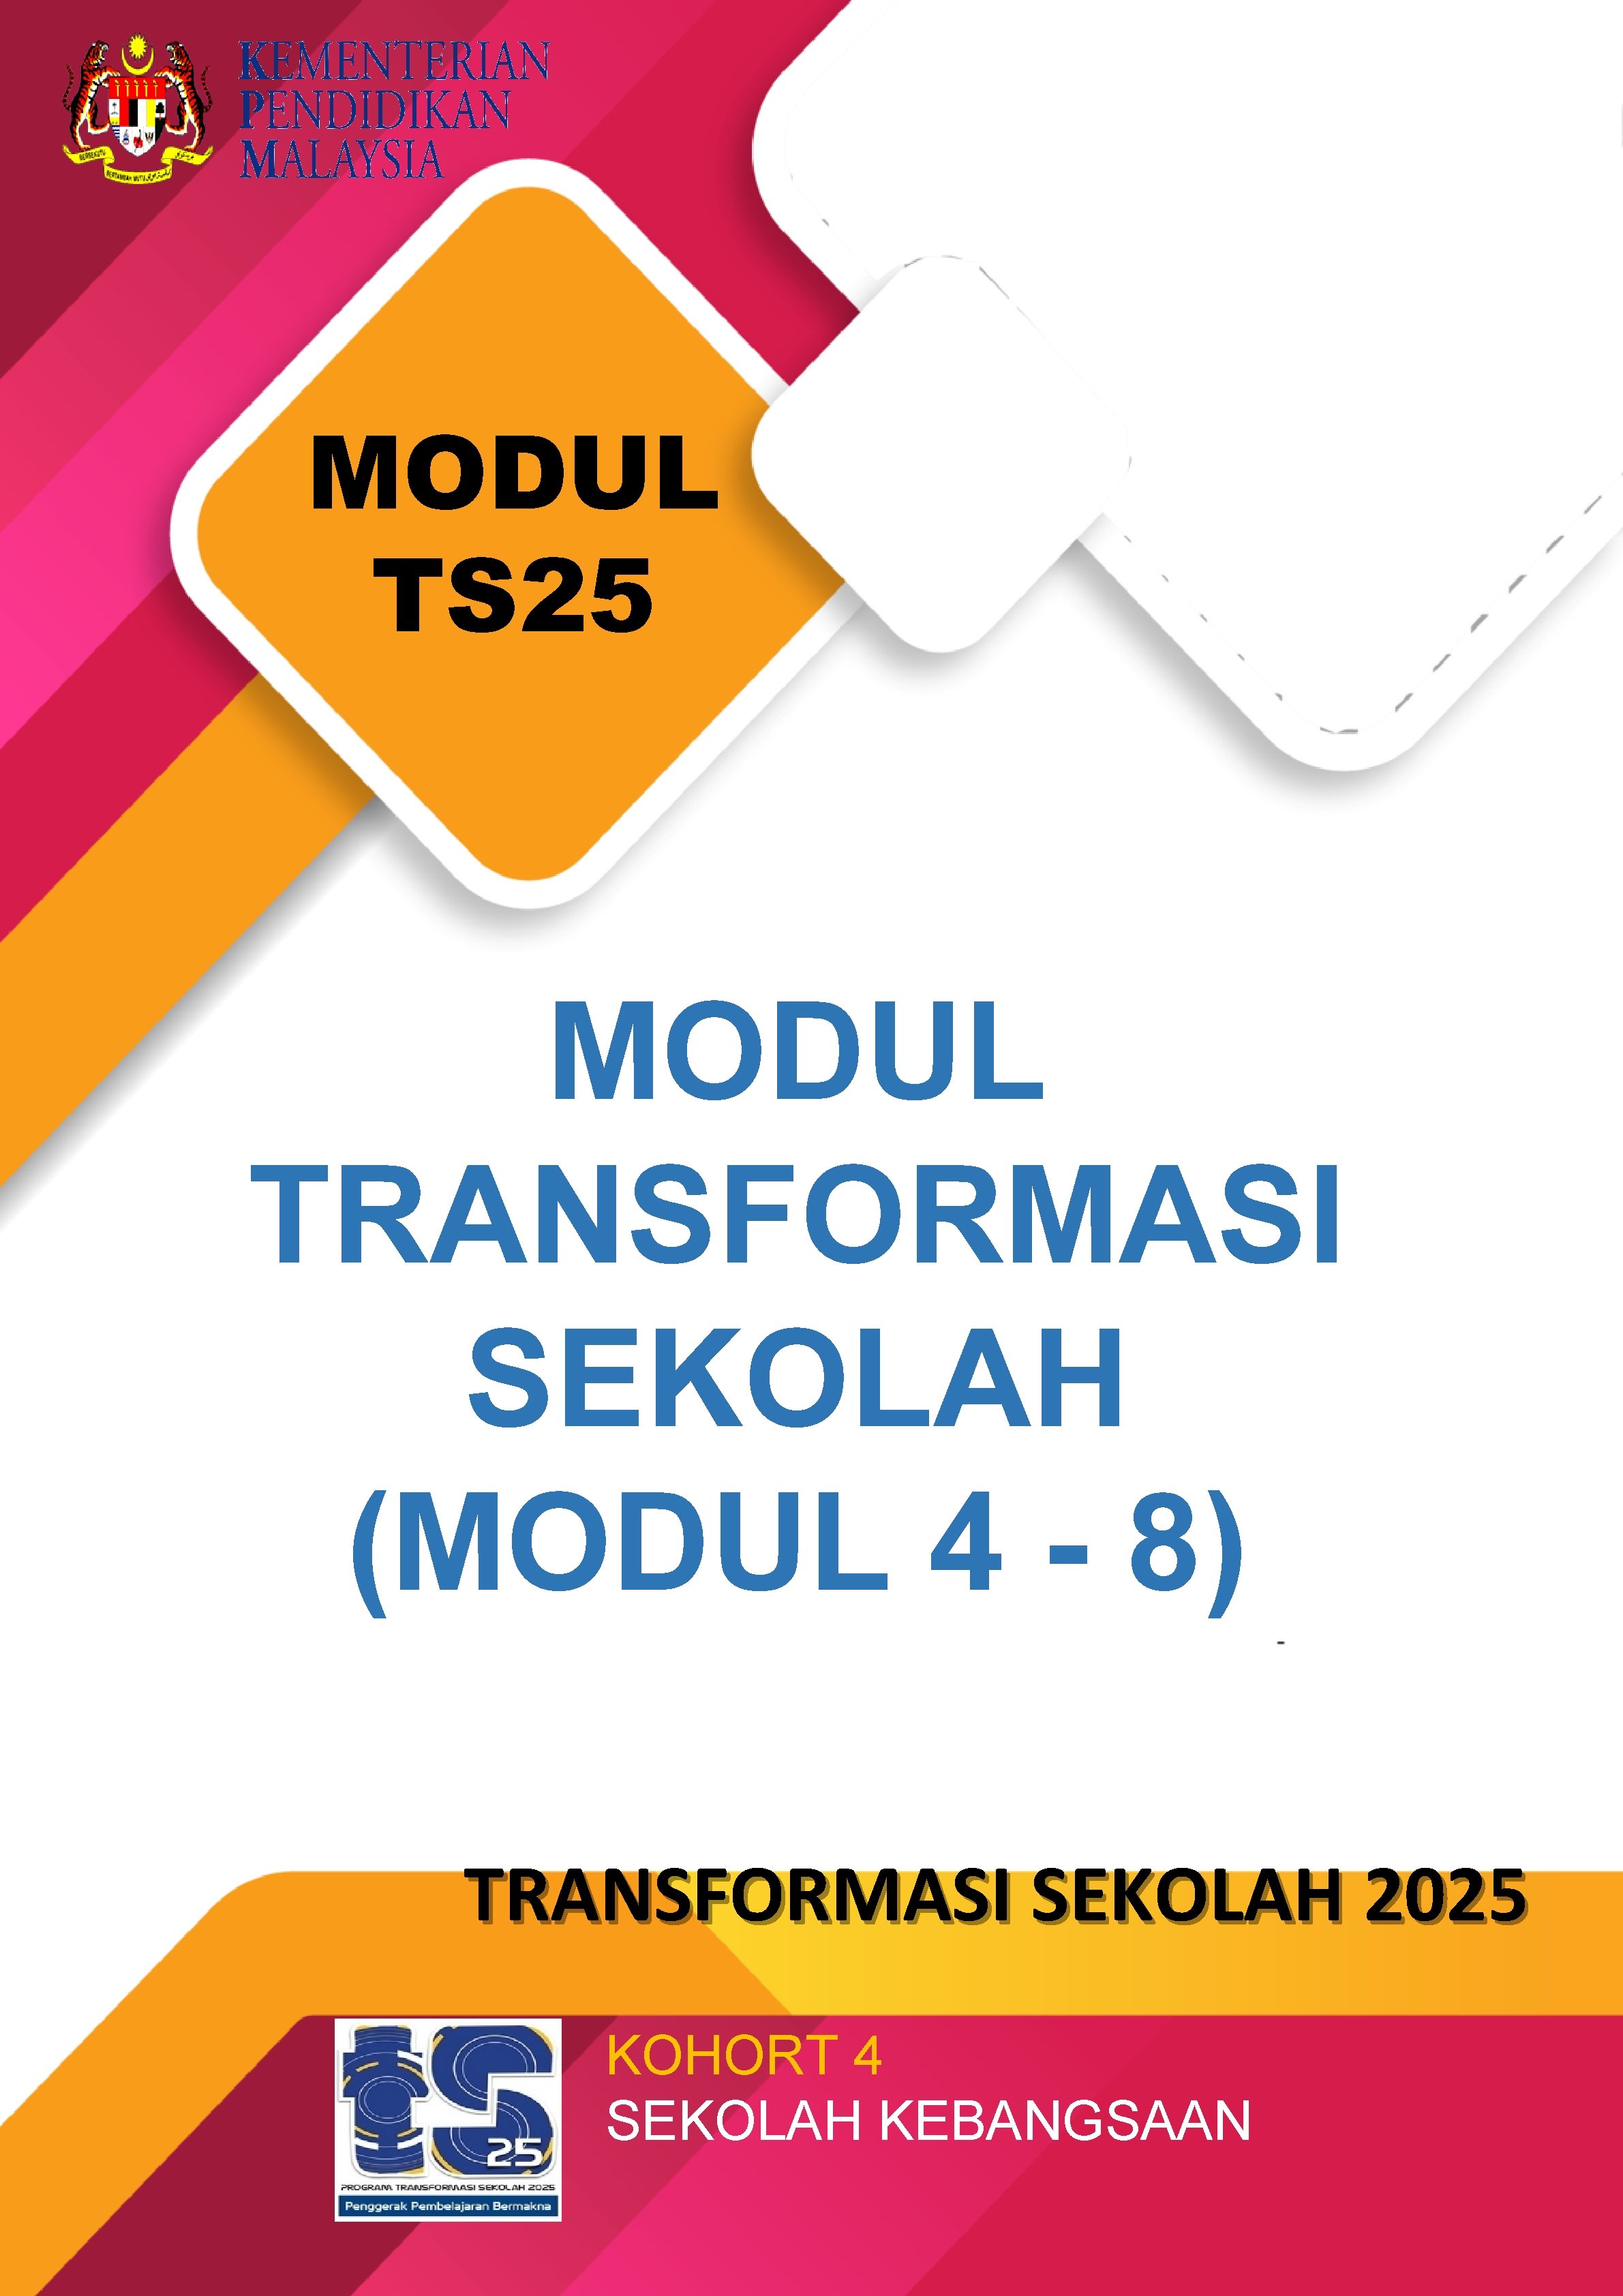 MODUL TS 25 MODUL TRANSFORMASI SEKOLAH (MODUL 4 - 8) TRANSFORMASI SEKOLAH 2025 KOHORT